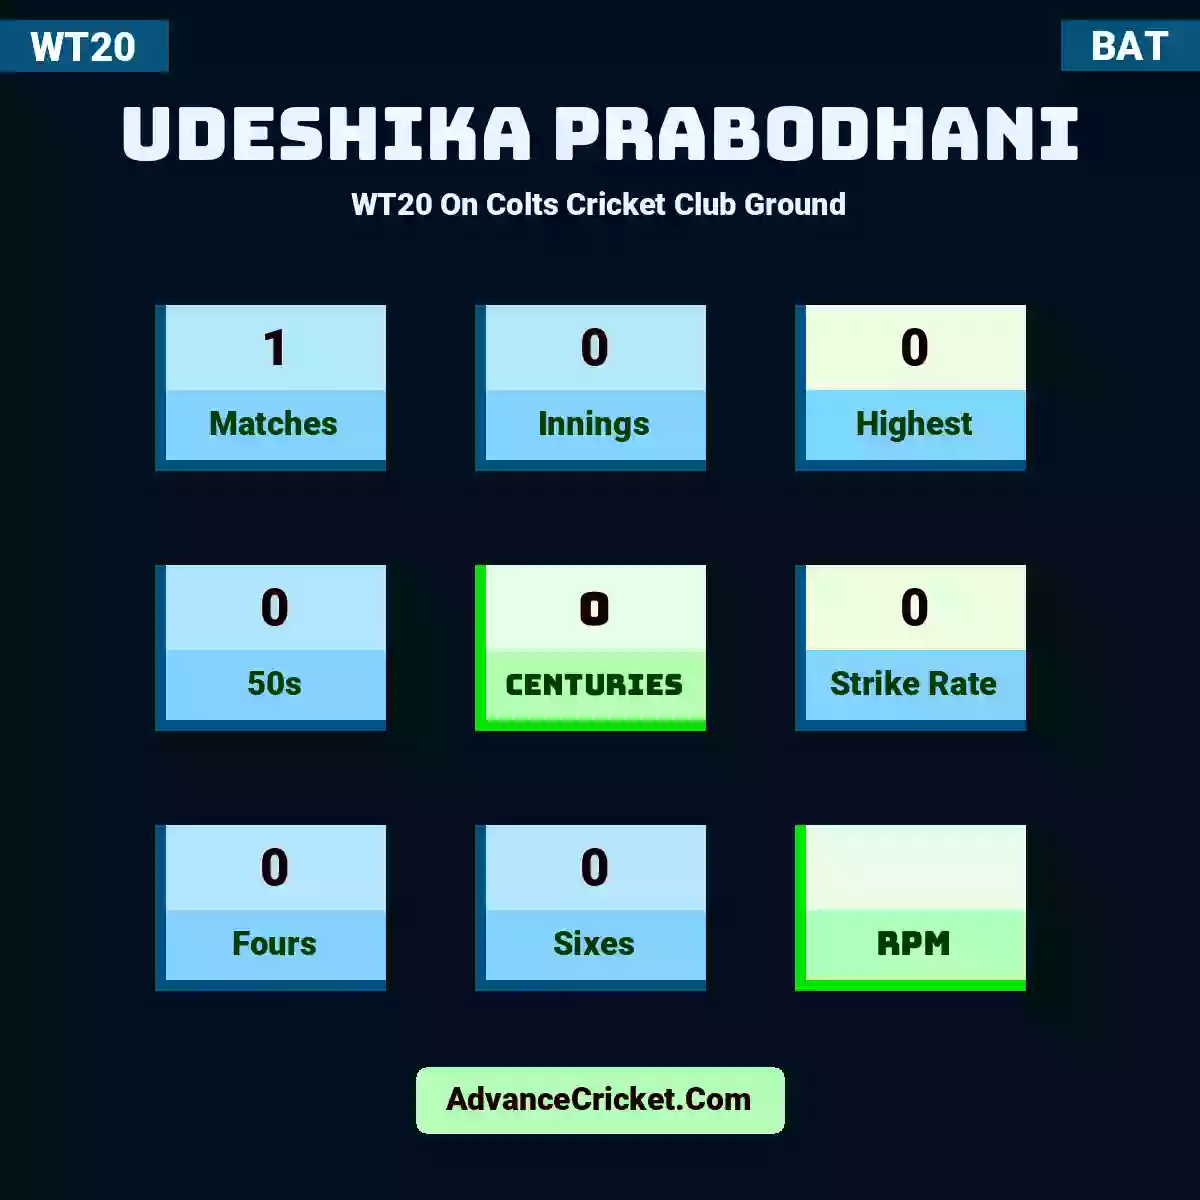 Udeshika Prabodhani WT20  On Colts Cricket Club Ground, Udeshika Prabodhani played 1 matches, scored 0 runs as highest, 0 half-centuries, and 0 centuries, with a strike rate of 0. U.Prabodhani hit 0 fours and 0 sixes.